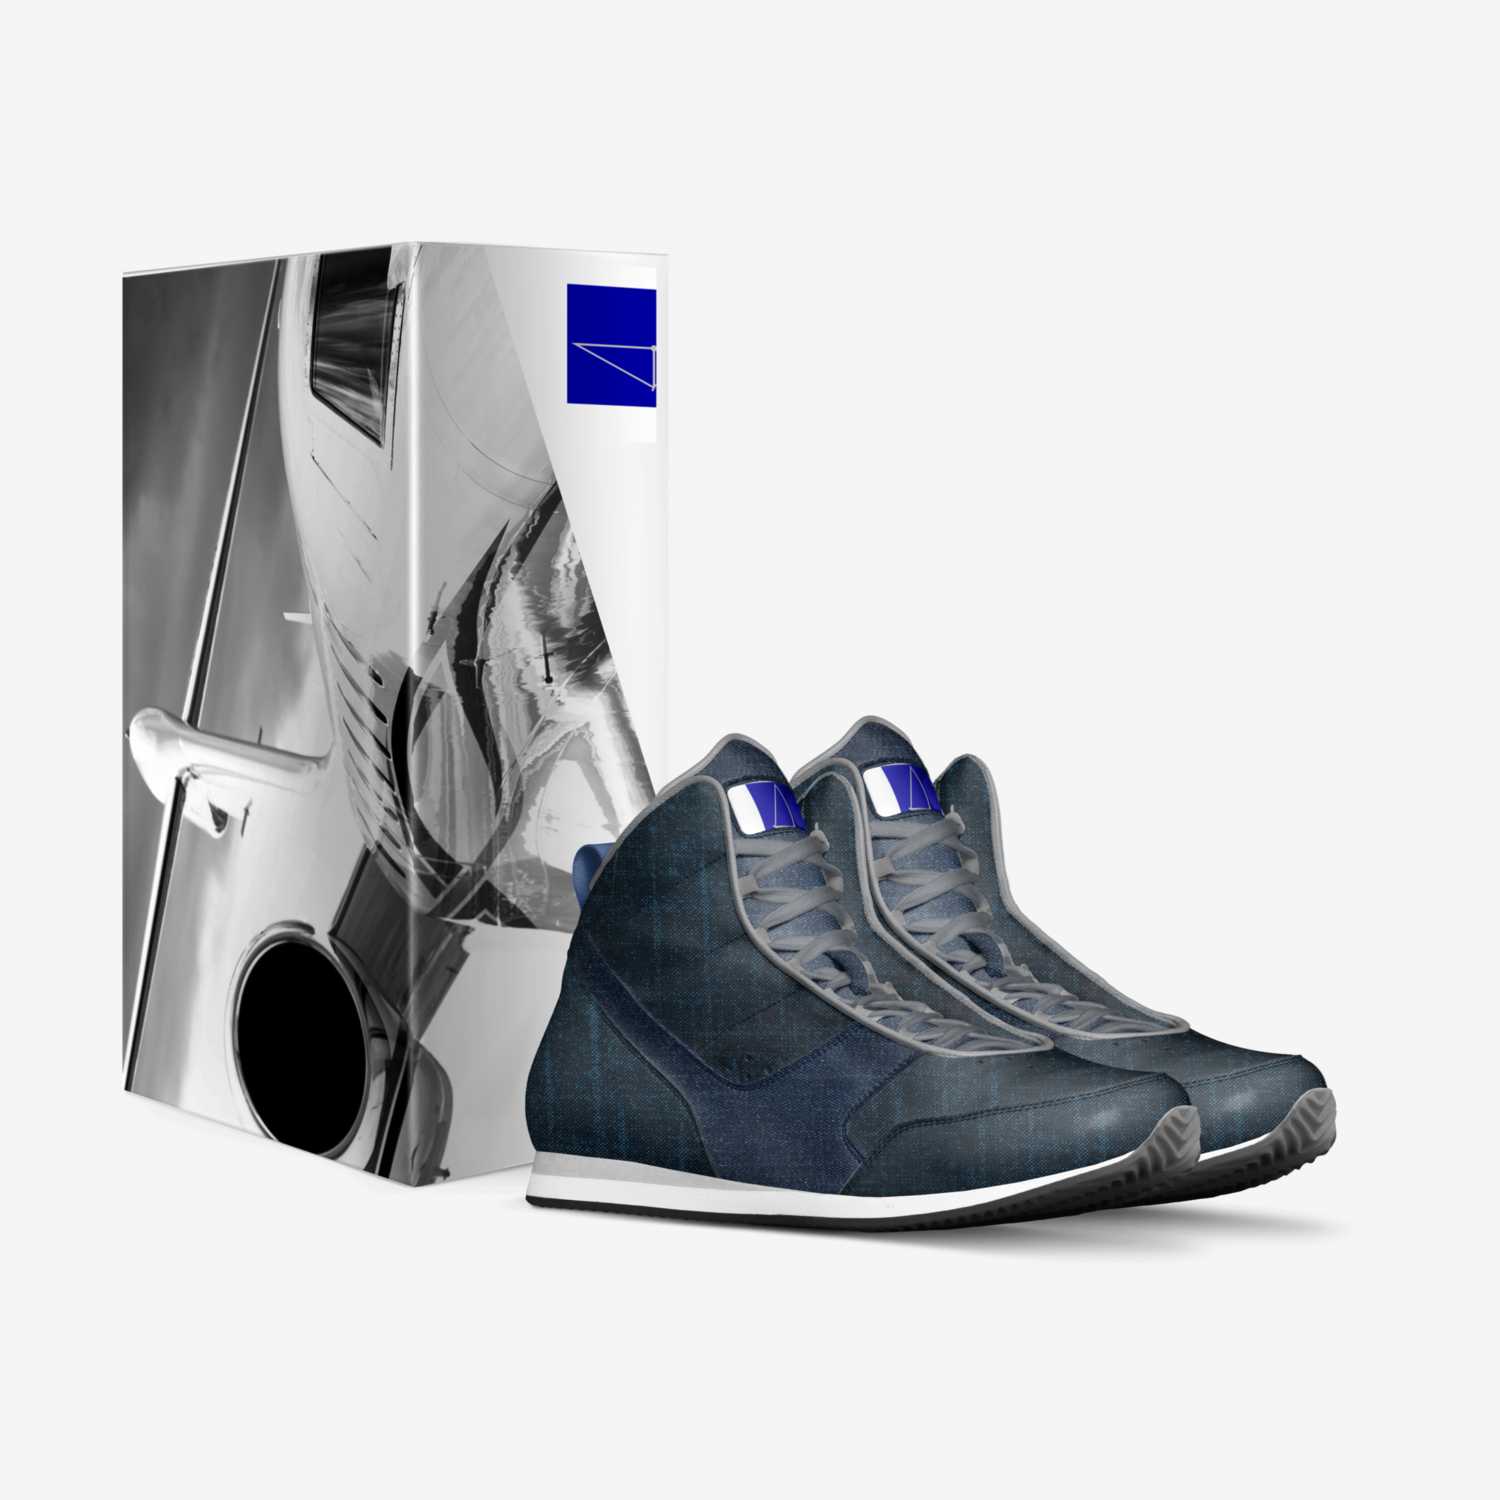 Z 88 custom made in Italy shoes by John Samano | Box view